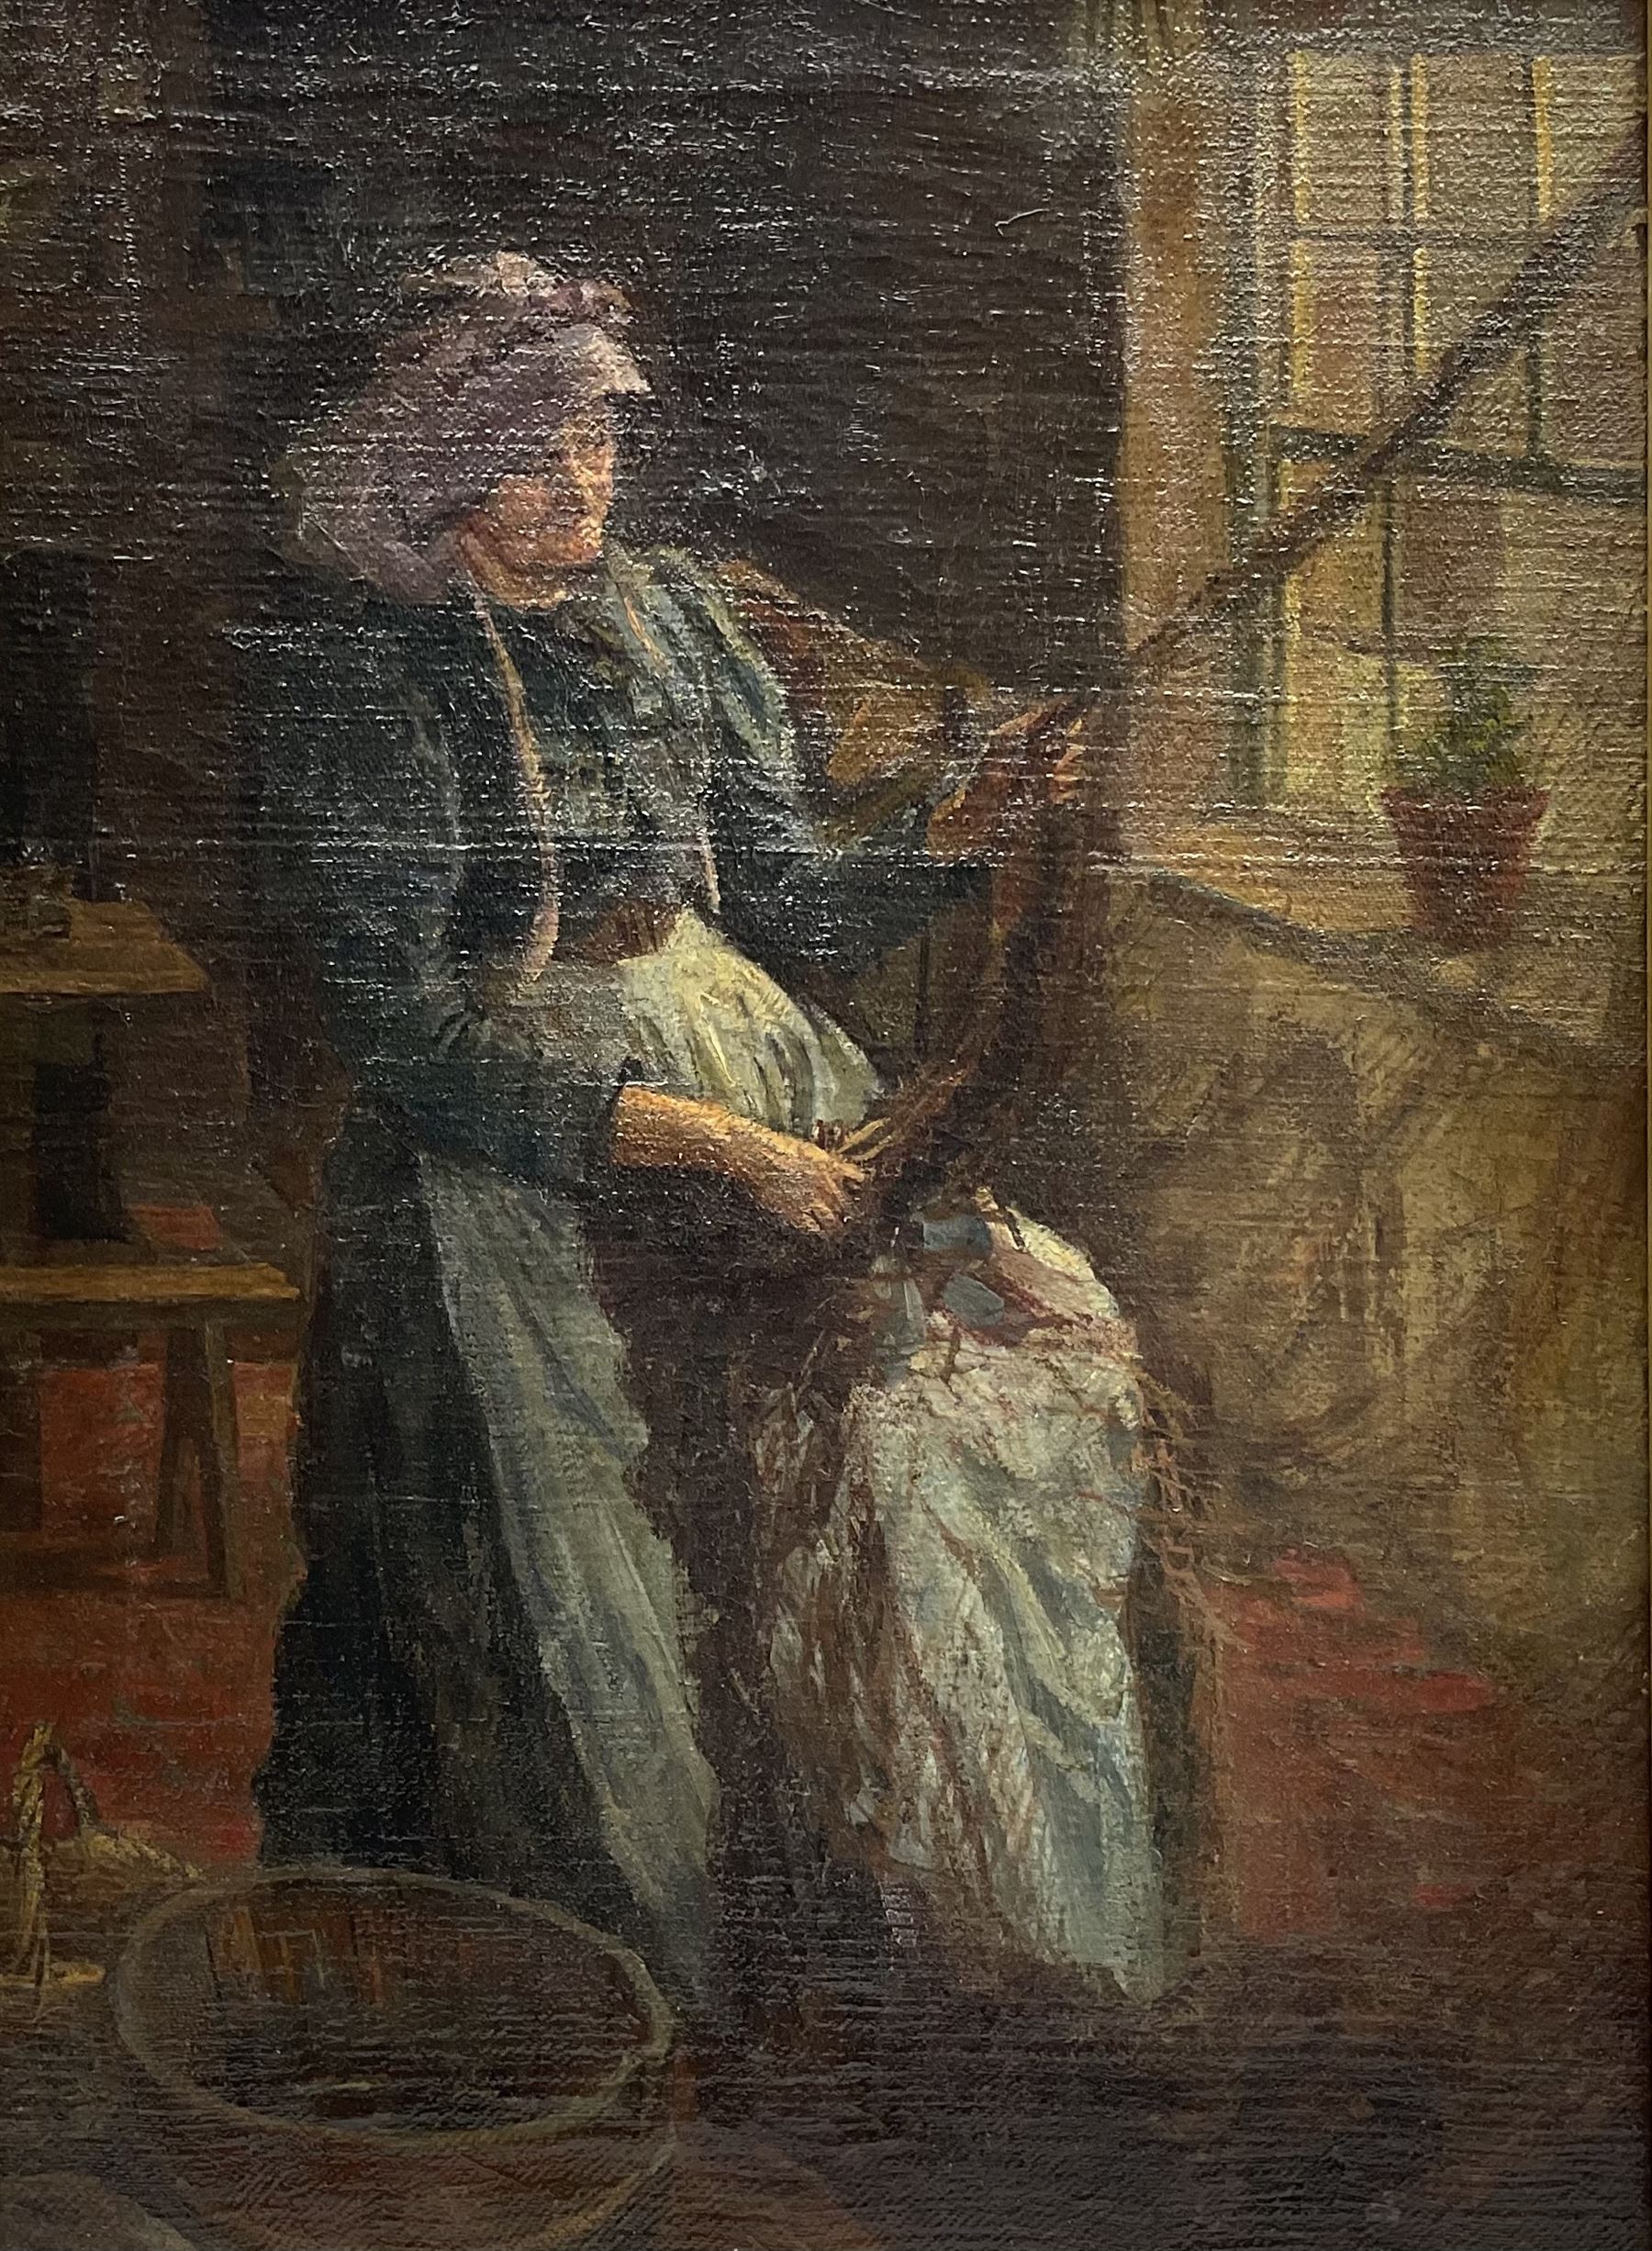 Robert Jobling (Staithes Group 1841-1923): Fisherwoman